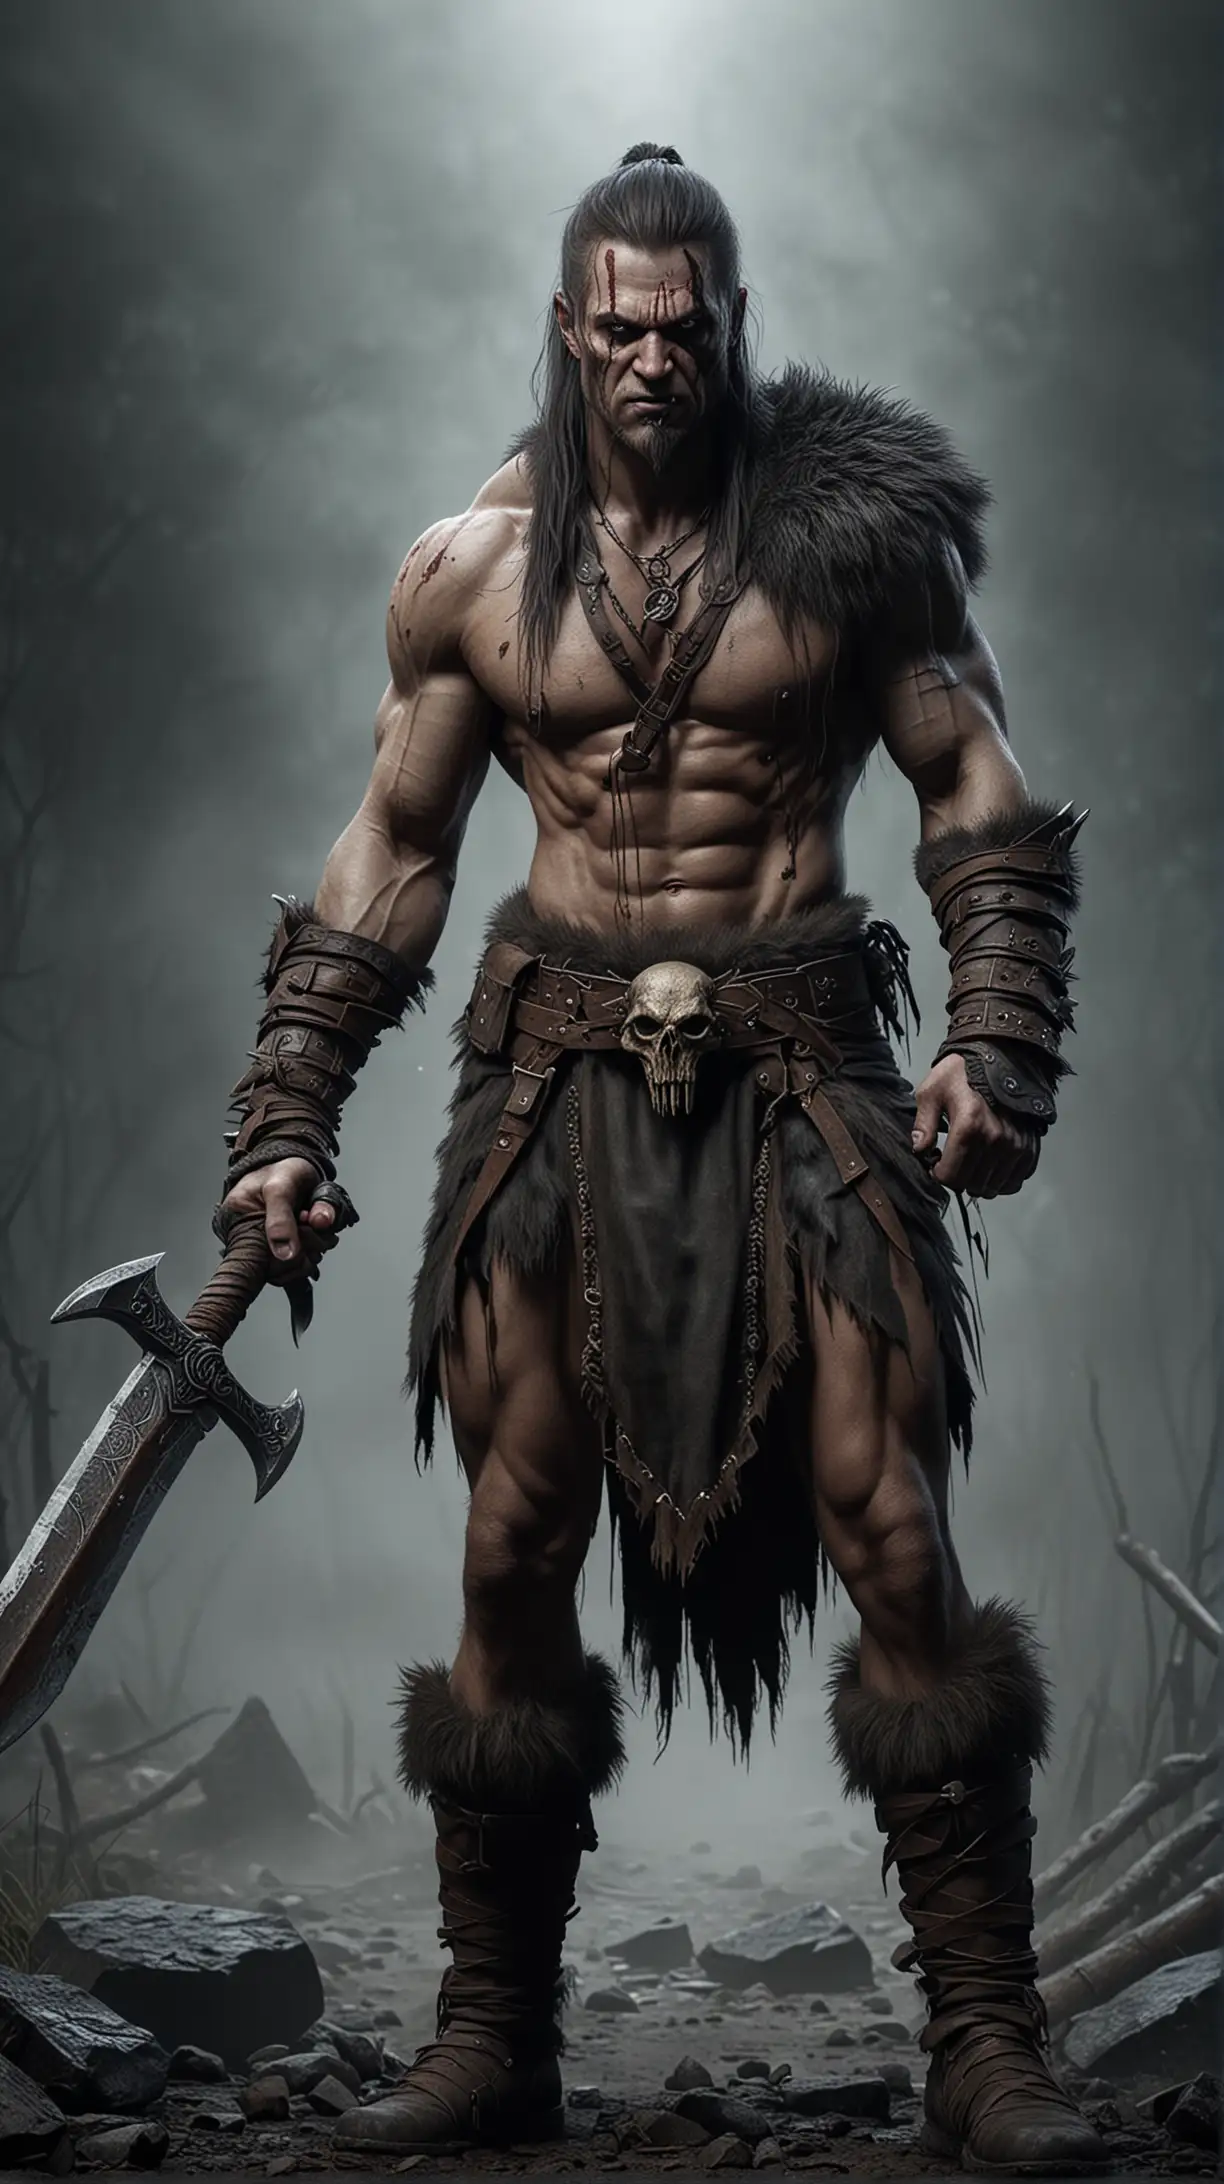 Rune Fehu as berserker, dark horror style, photo-realistic, hyper-realistic